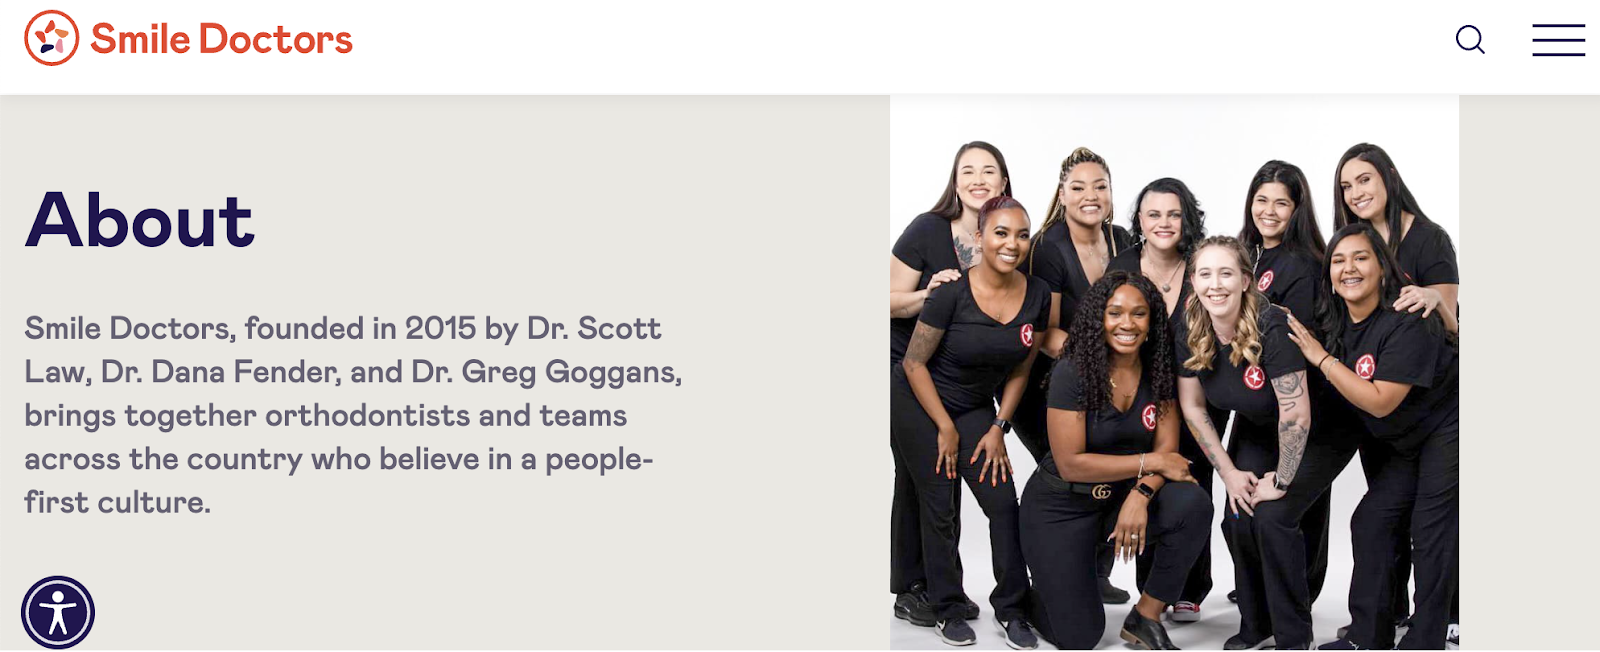 dental marketing campaigns, Smile Doctors homepage